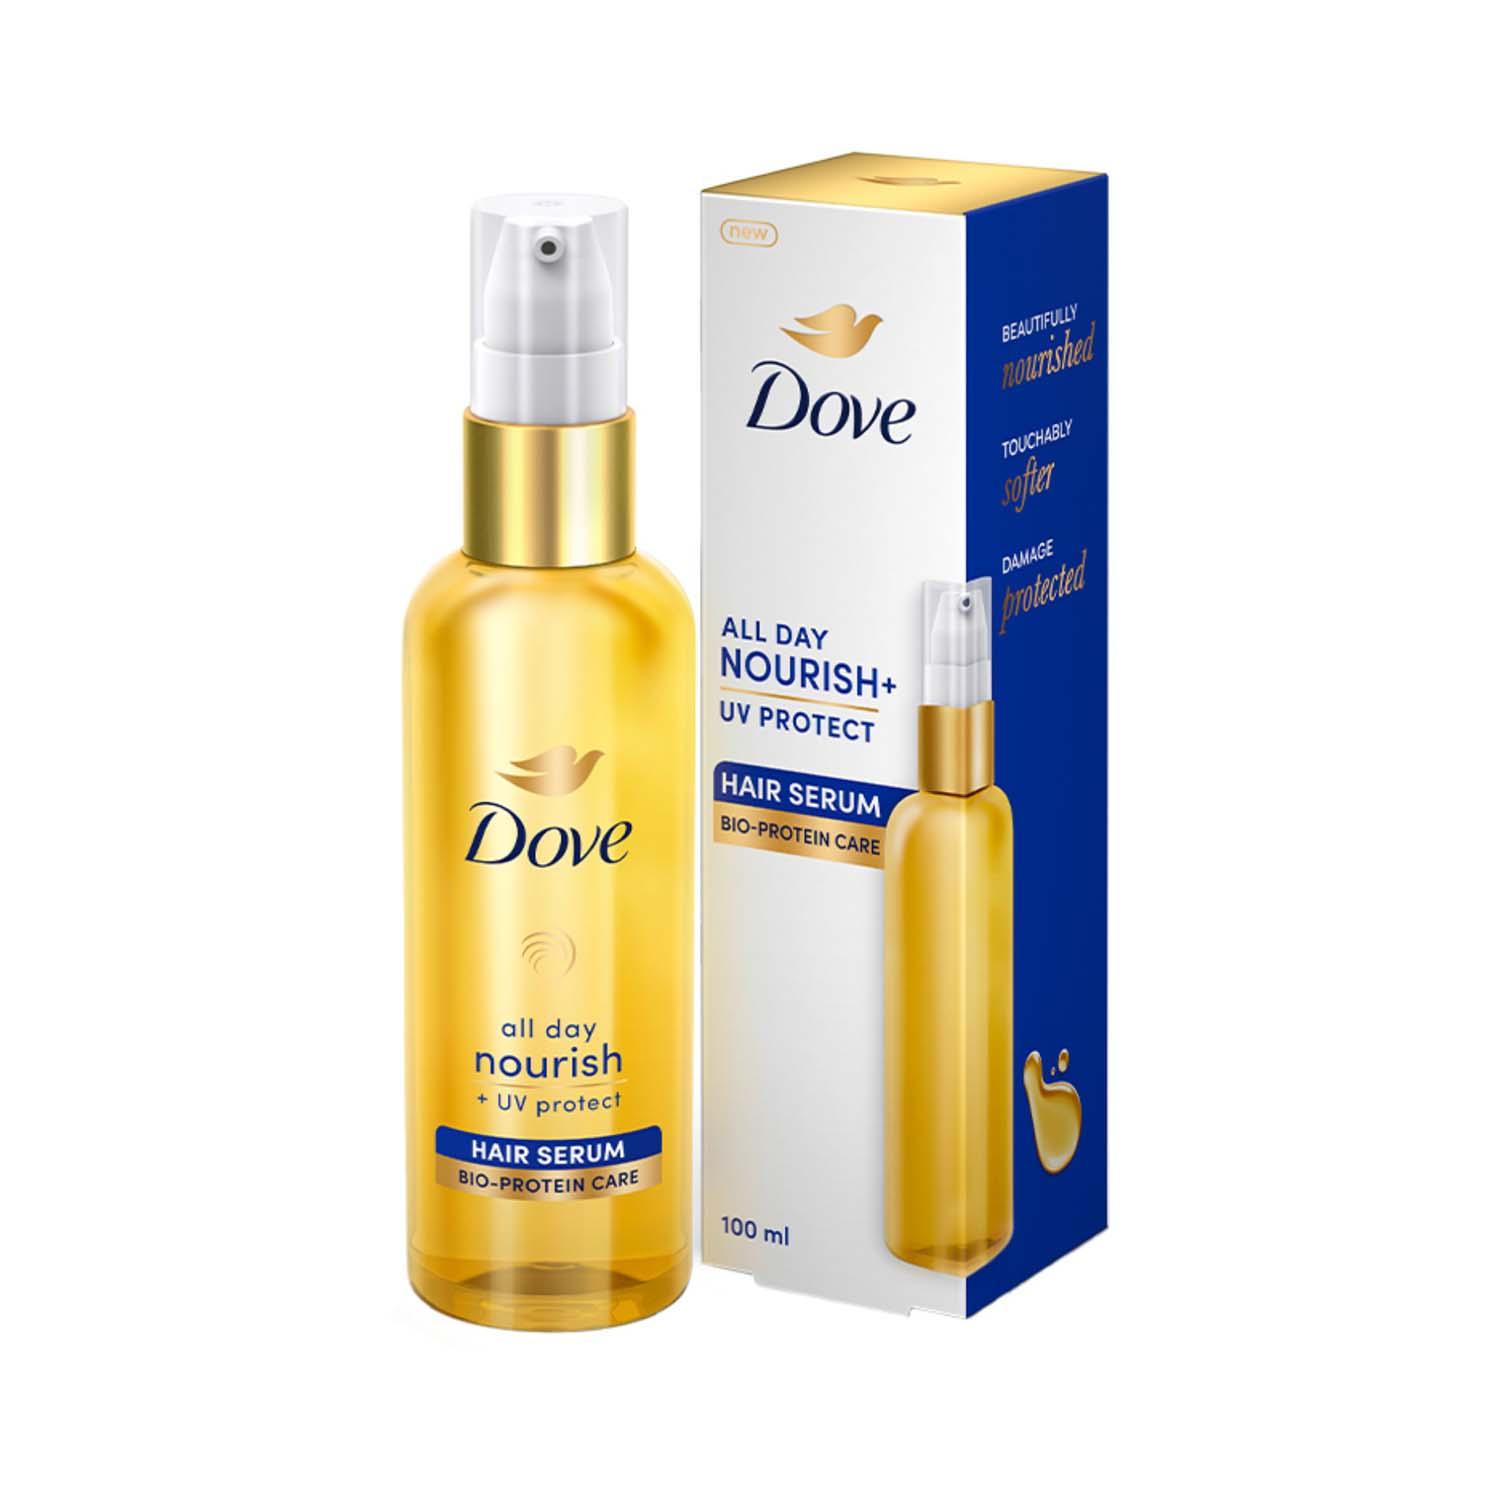 Dove | Dove All Day Nourish + UV Protect Hair Serum (100 ml)